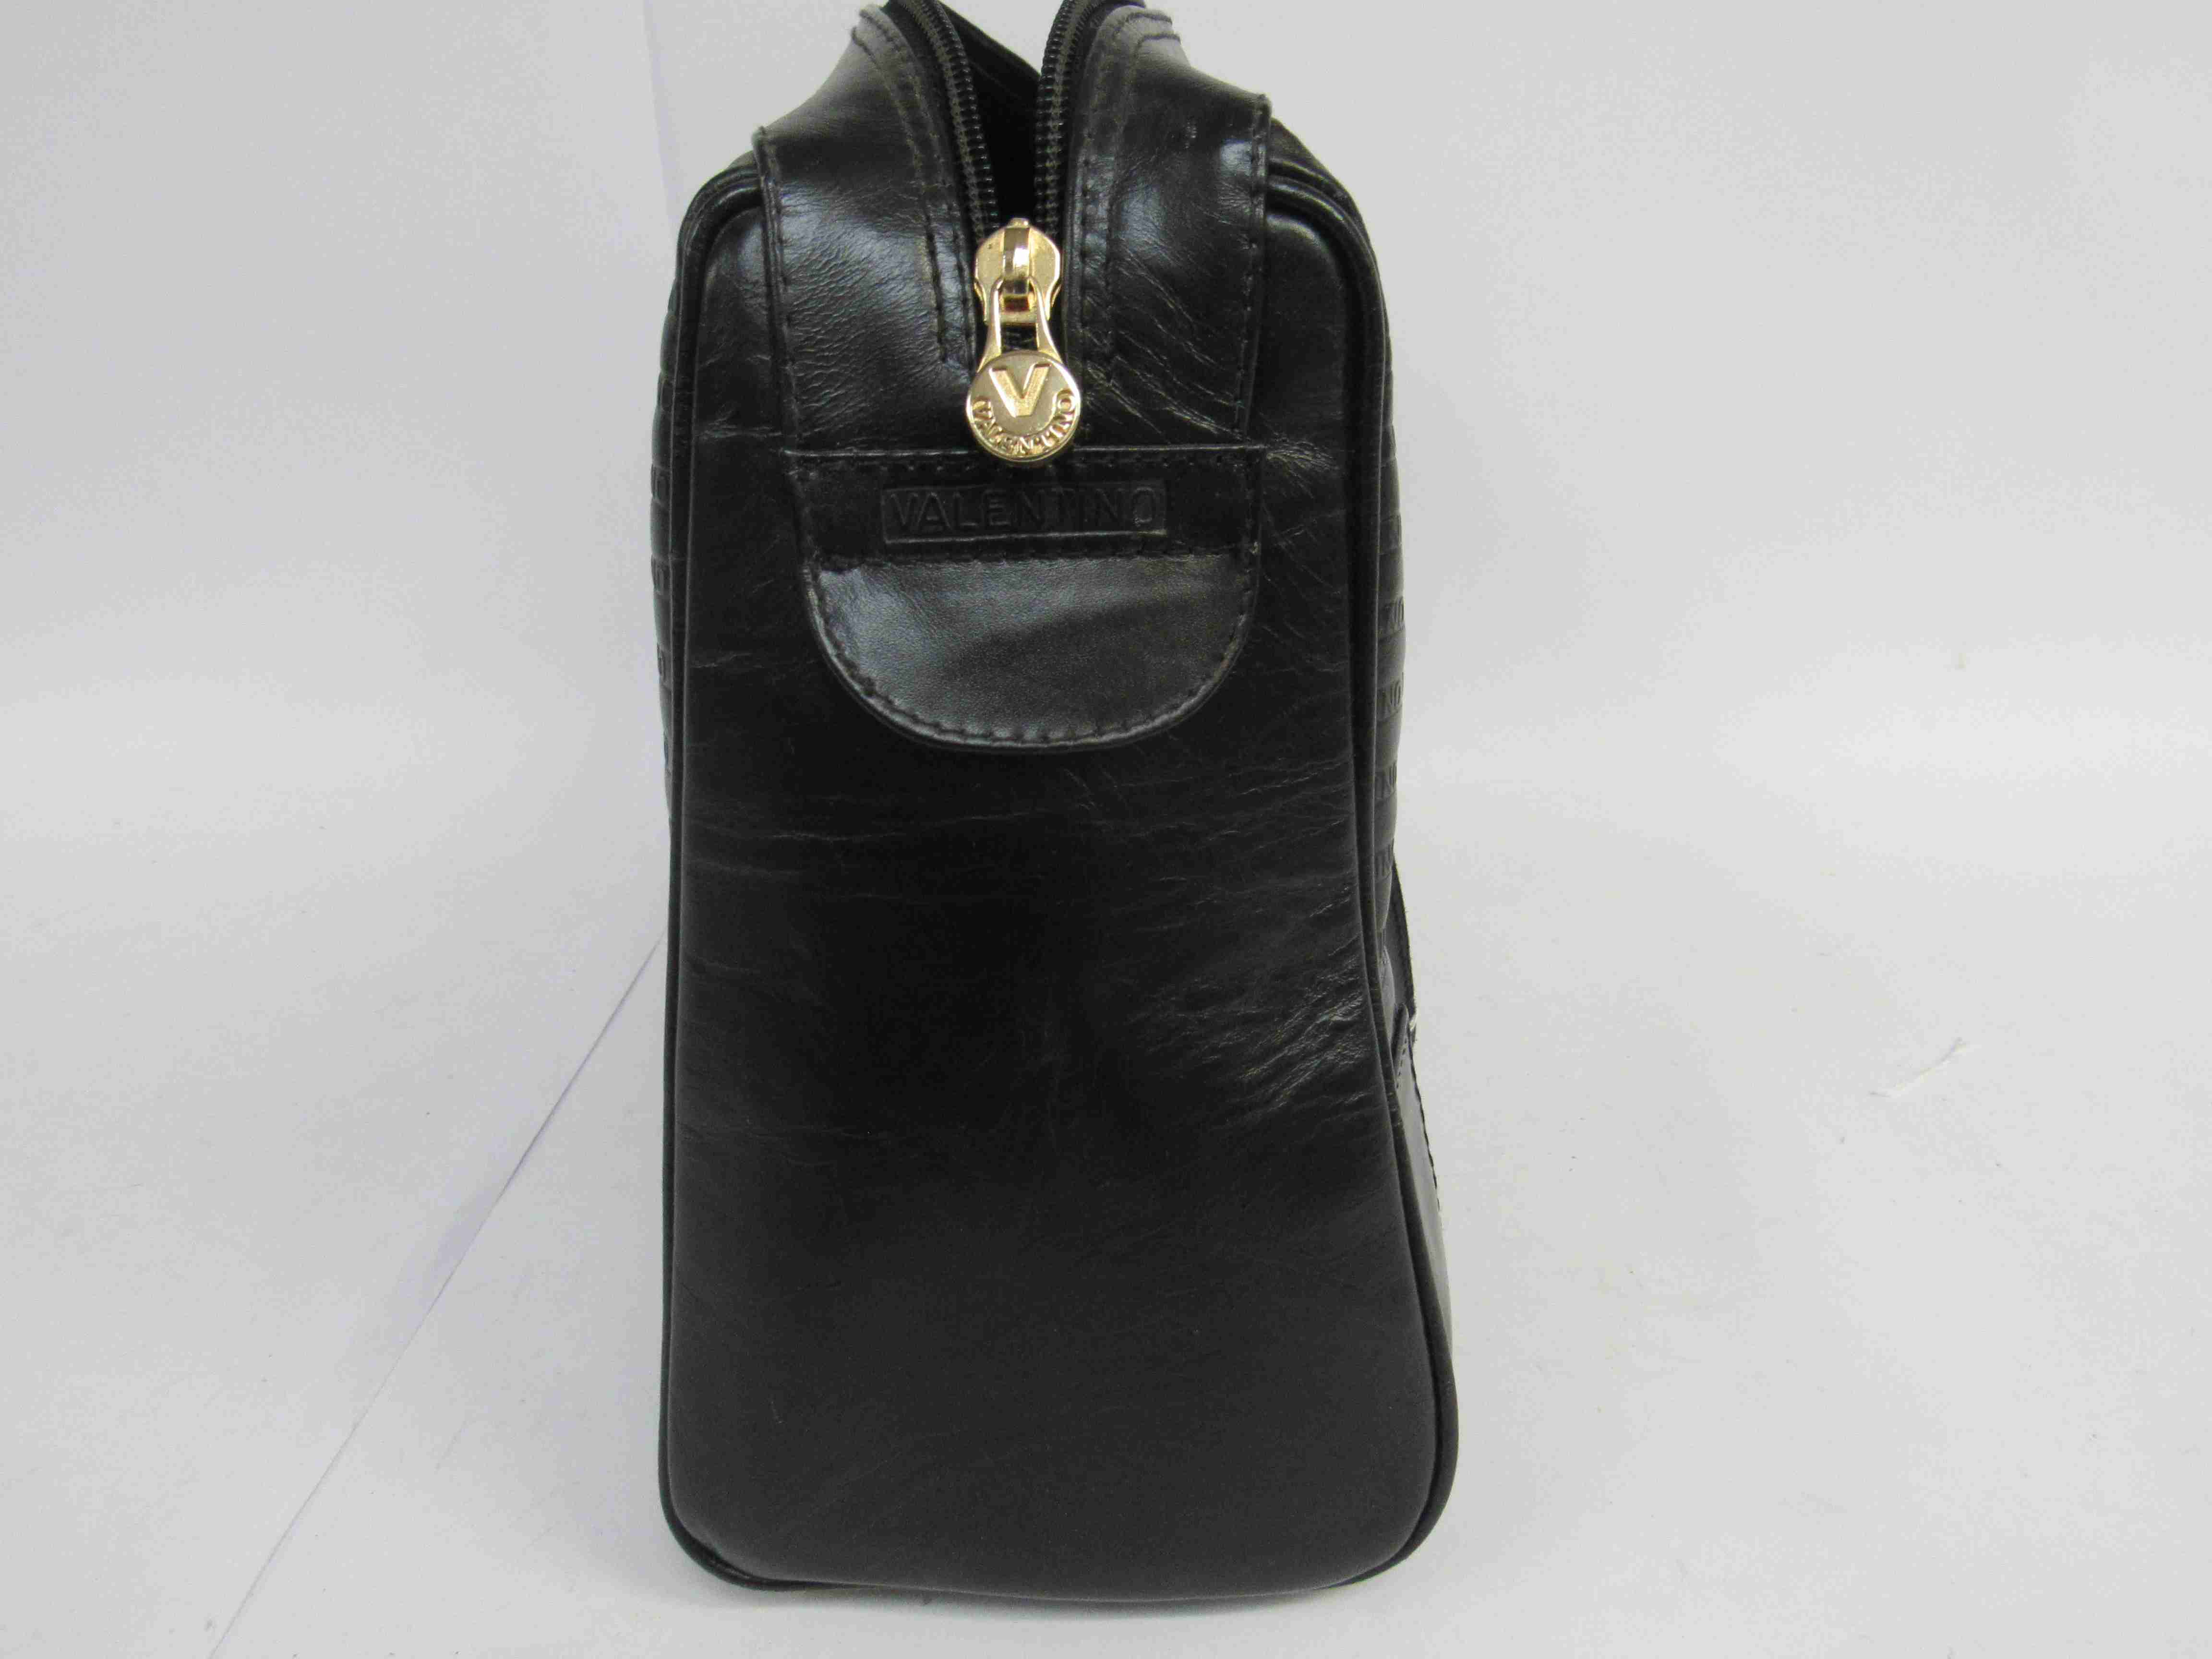 VALENTINO black leather soft body handbag. - Image 3 of 12